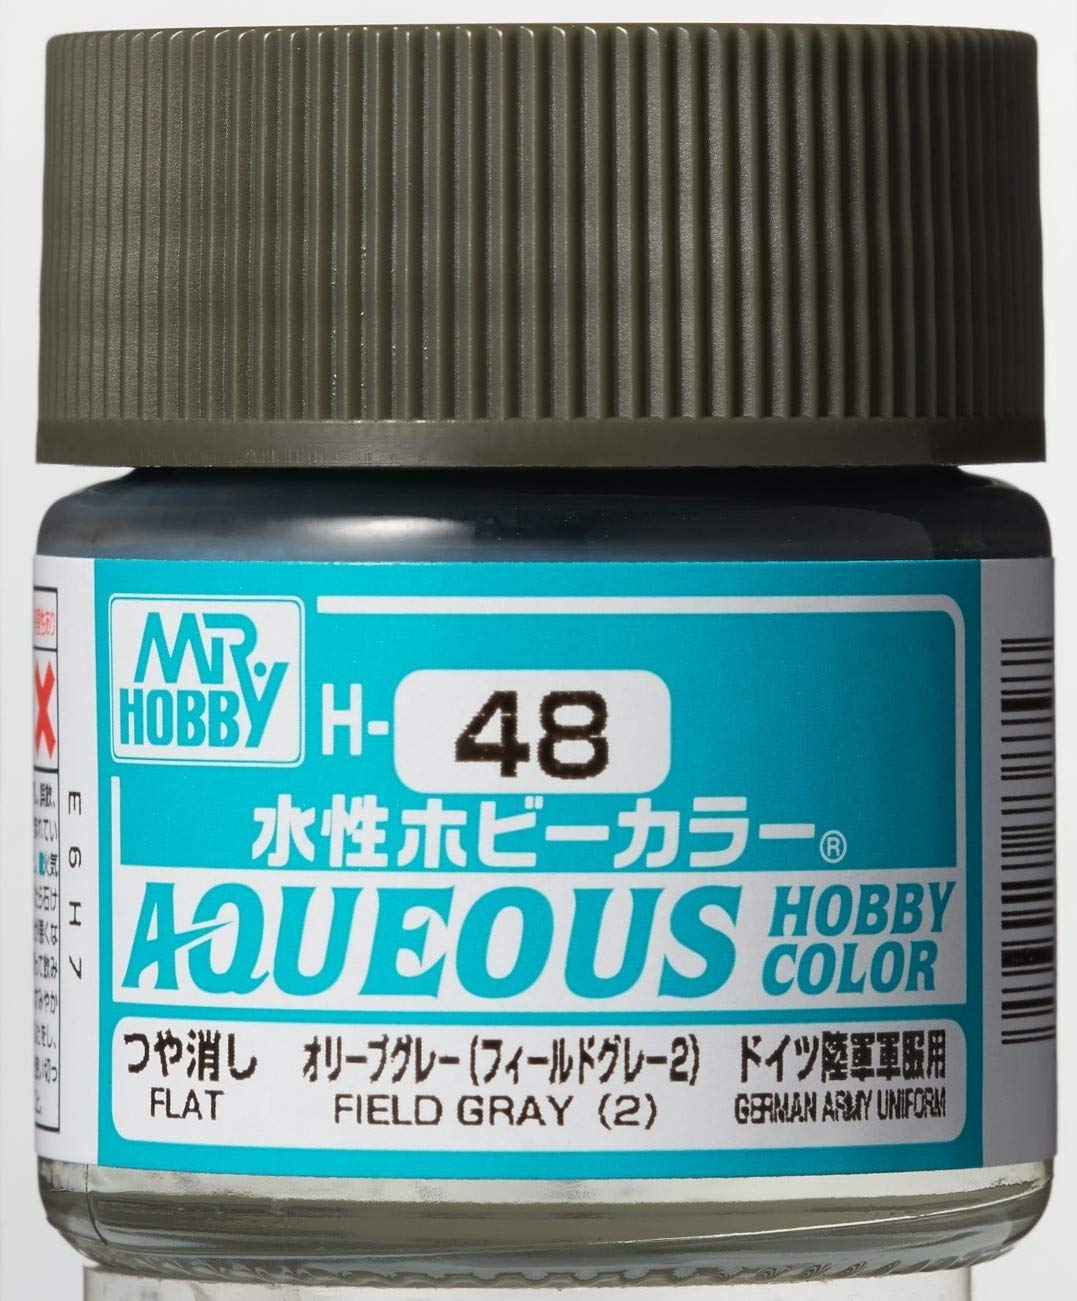 Mr. Hobby Aqueous Hobby Color H48 Flat Olive Gray (Field Gray 2) 10ml Bottle